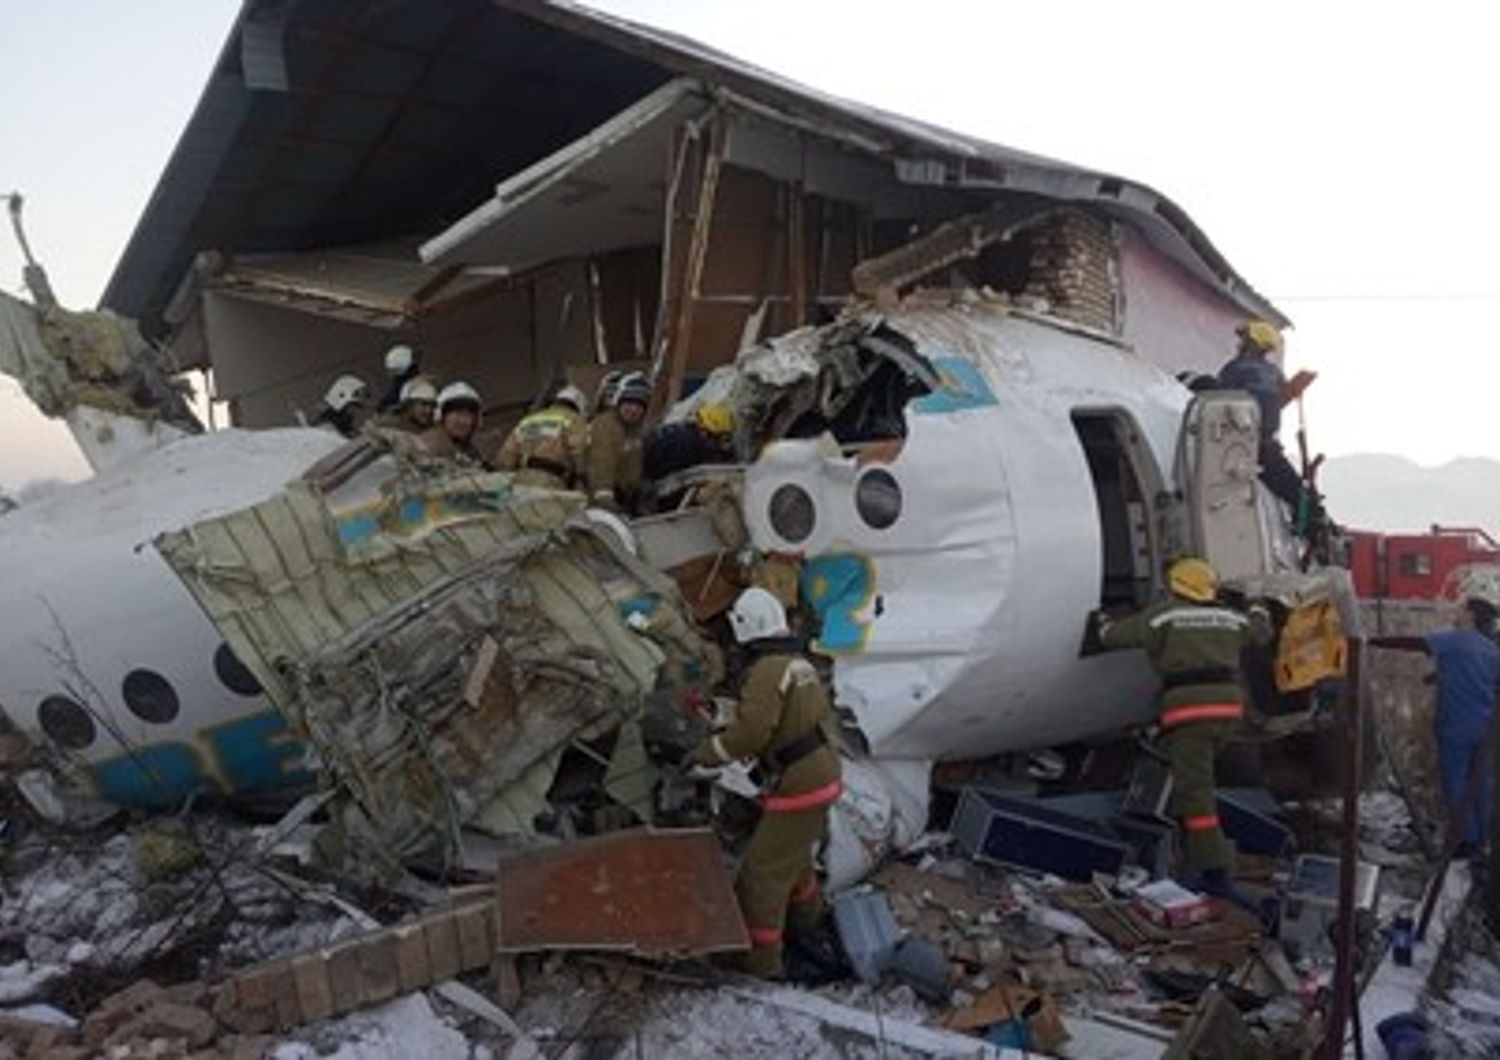 Il luogo del disastro aereo in Kazakistan